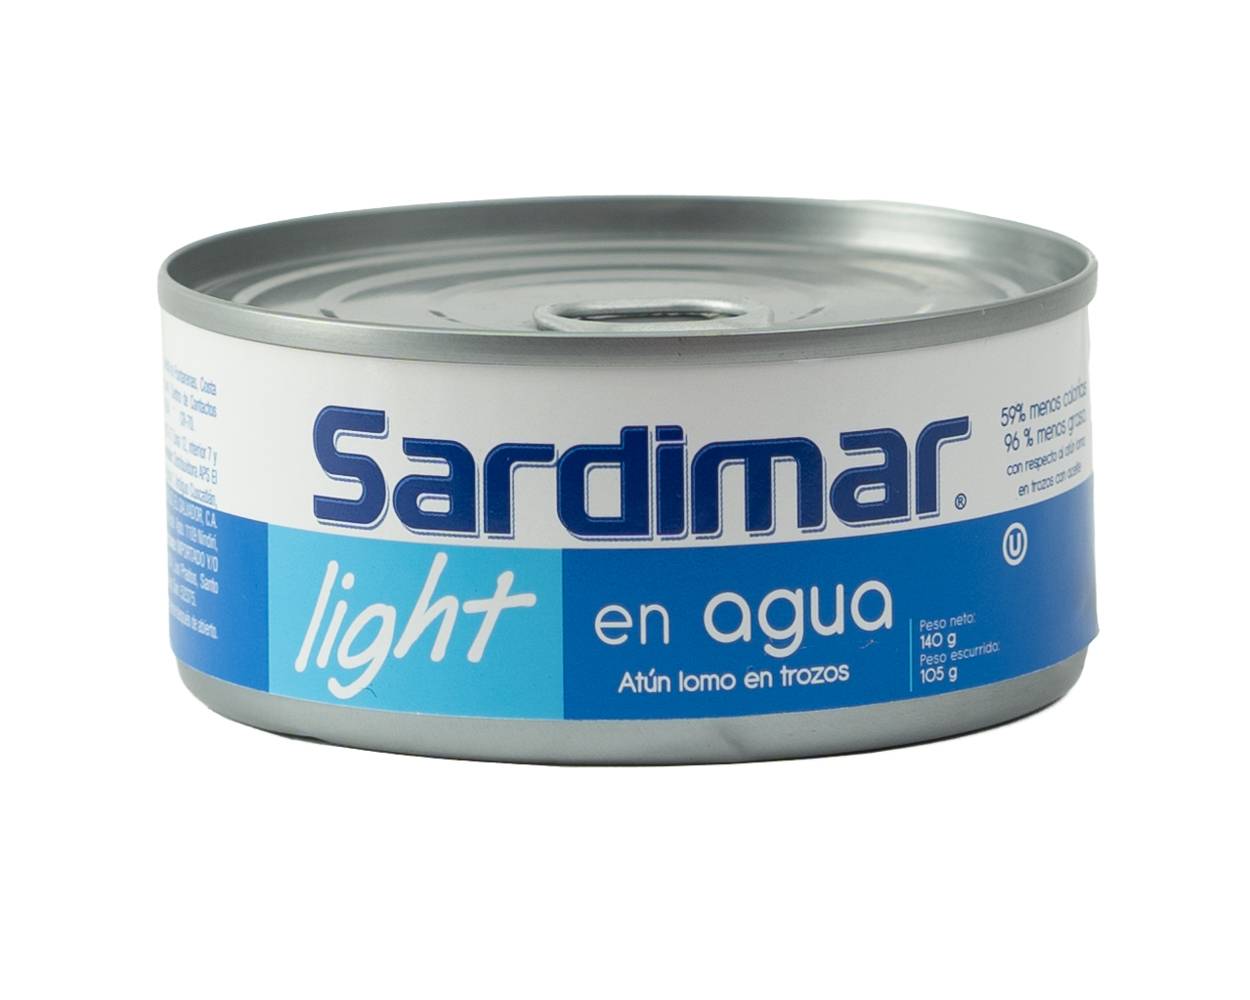 Sardimar atún light trozos en agua (140 g)